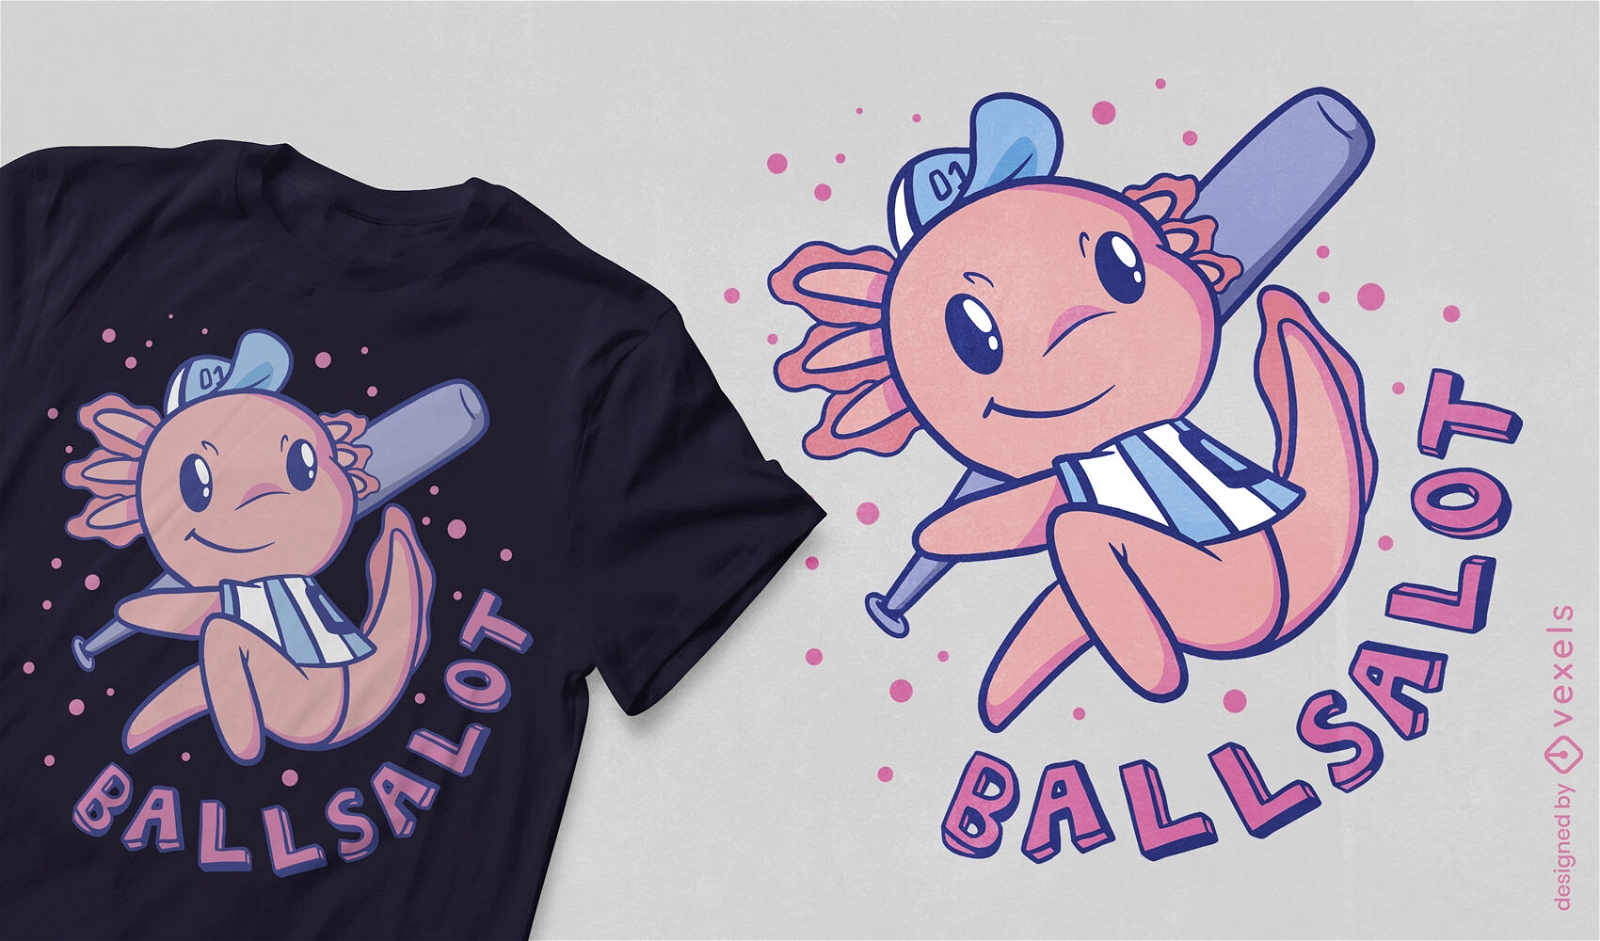 Axolotl spielt Baseball-T-Shirt-Design